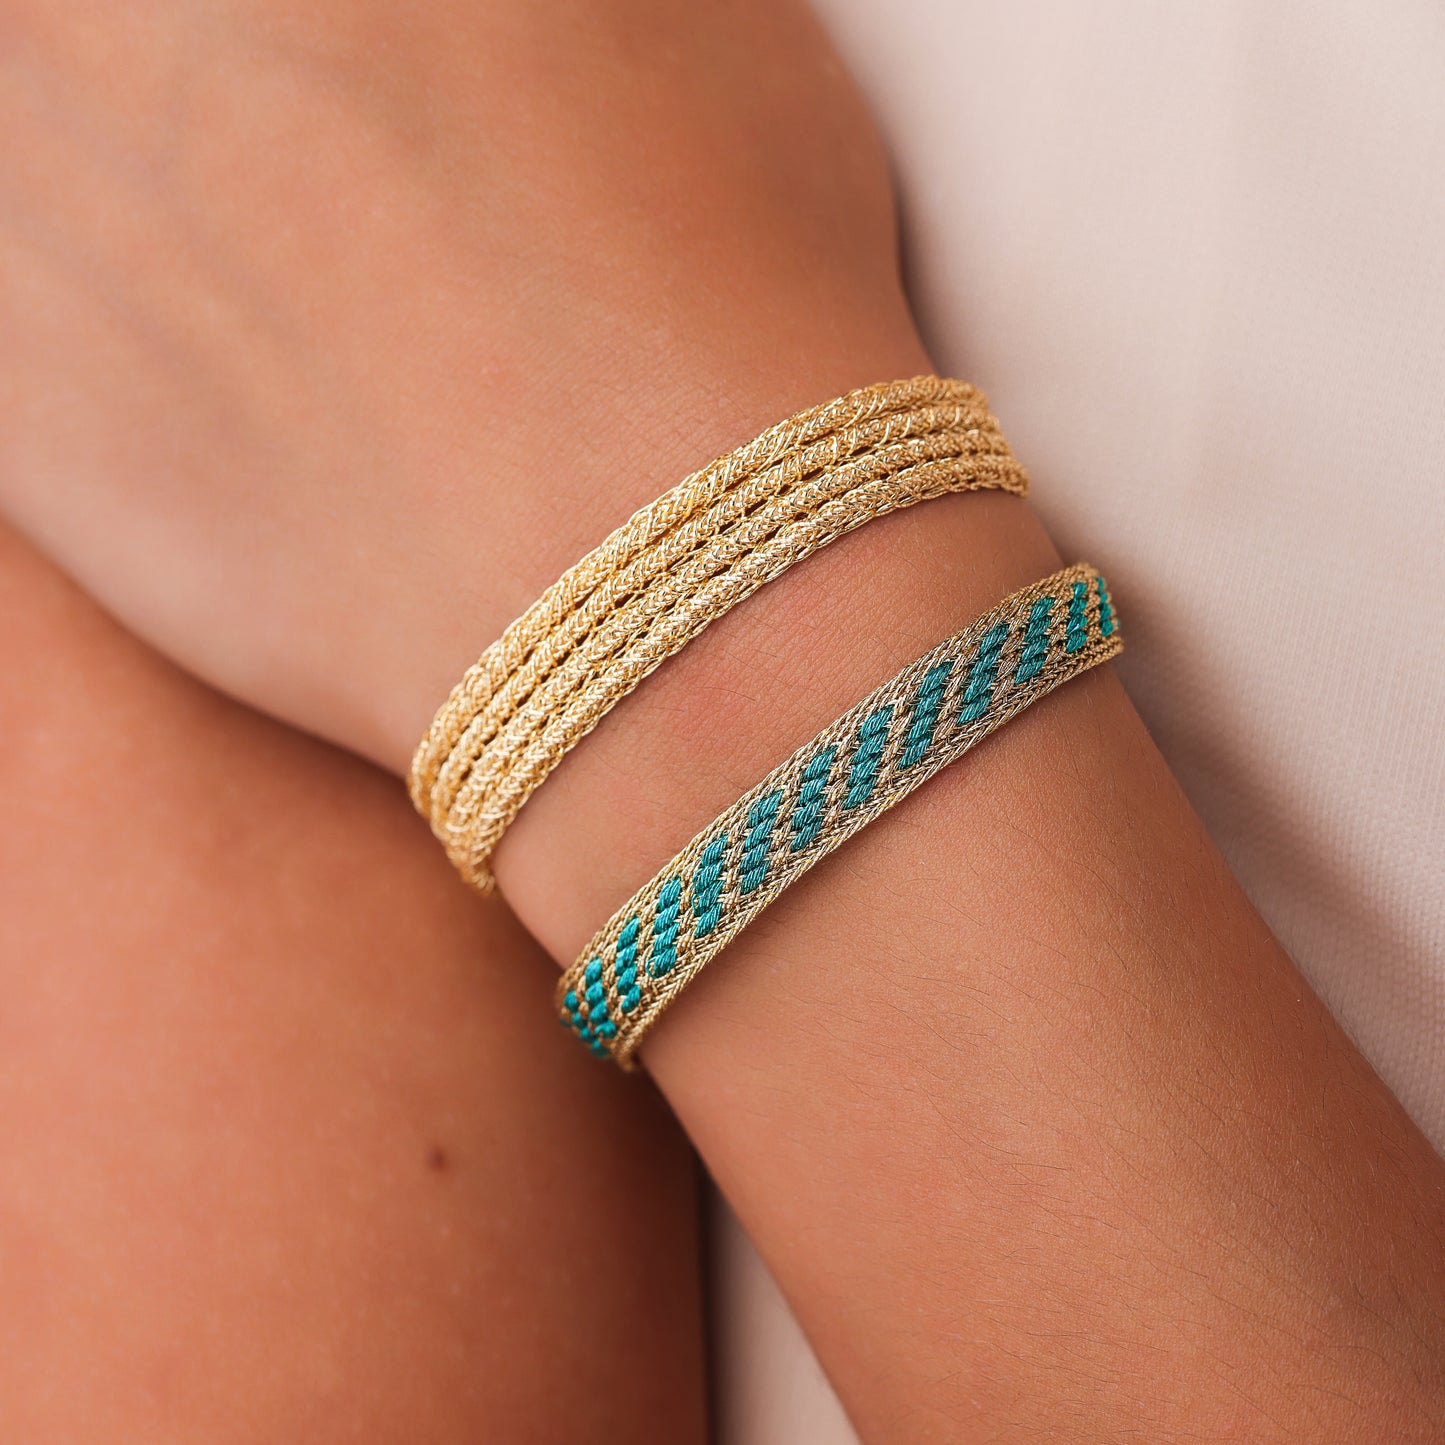 Izy n°2 Bracelet in Gold Tiffany Blue